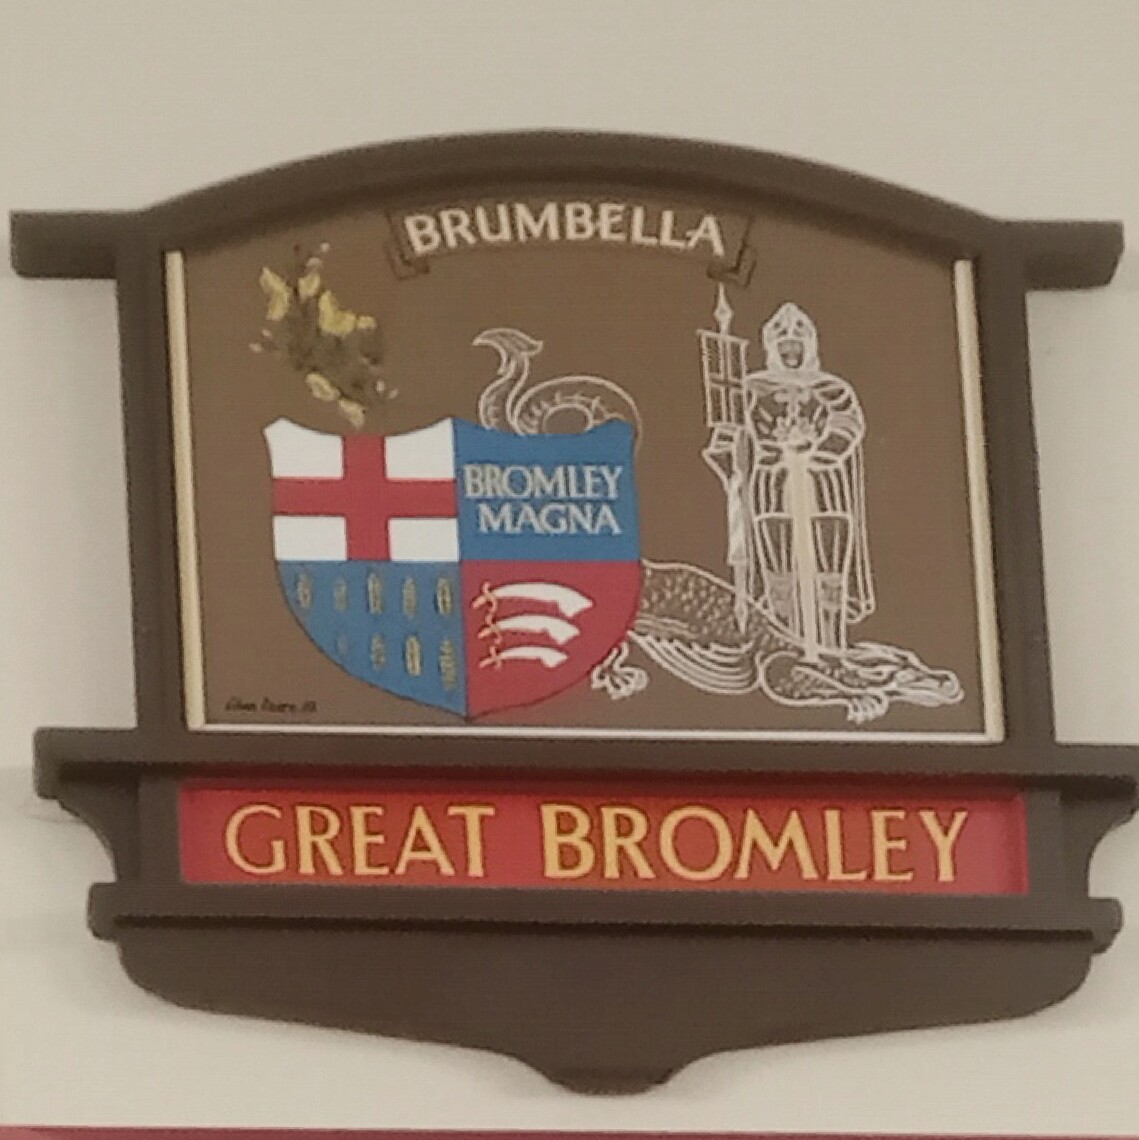 Great Bromley emblem